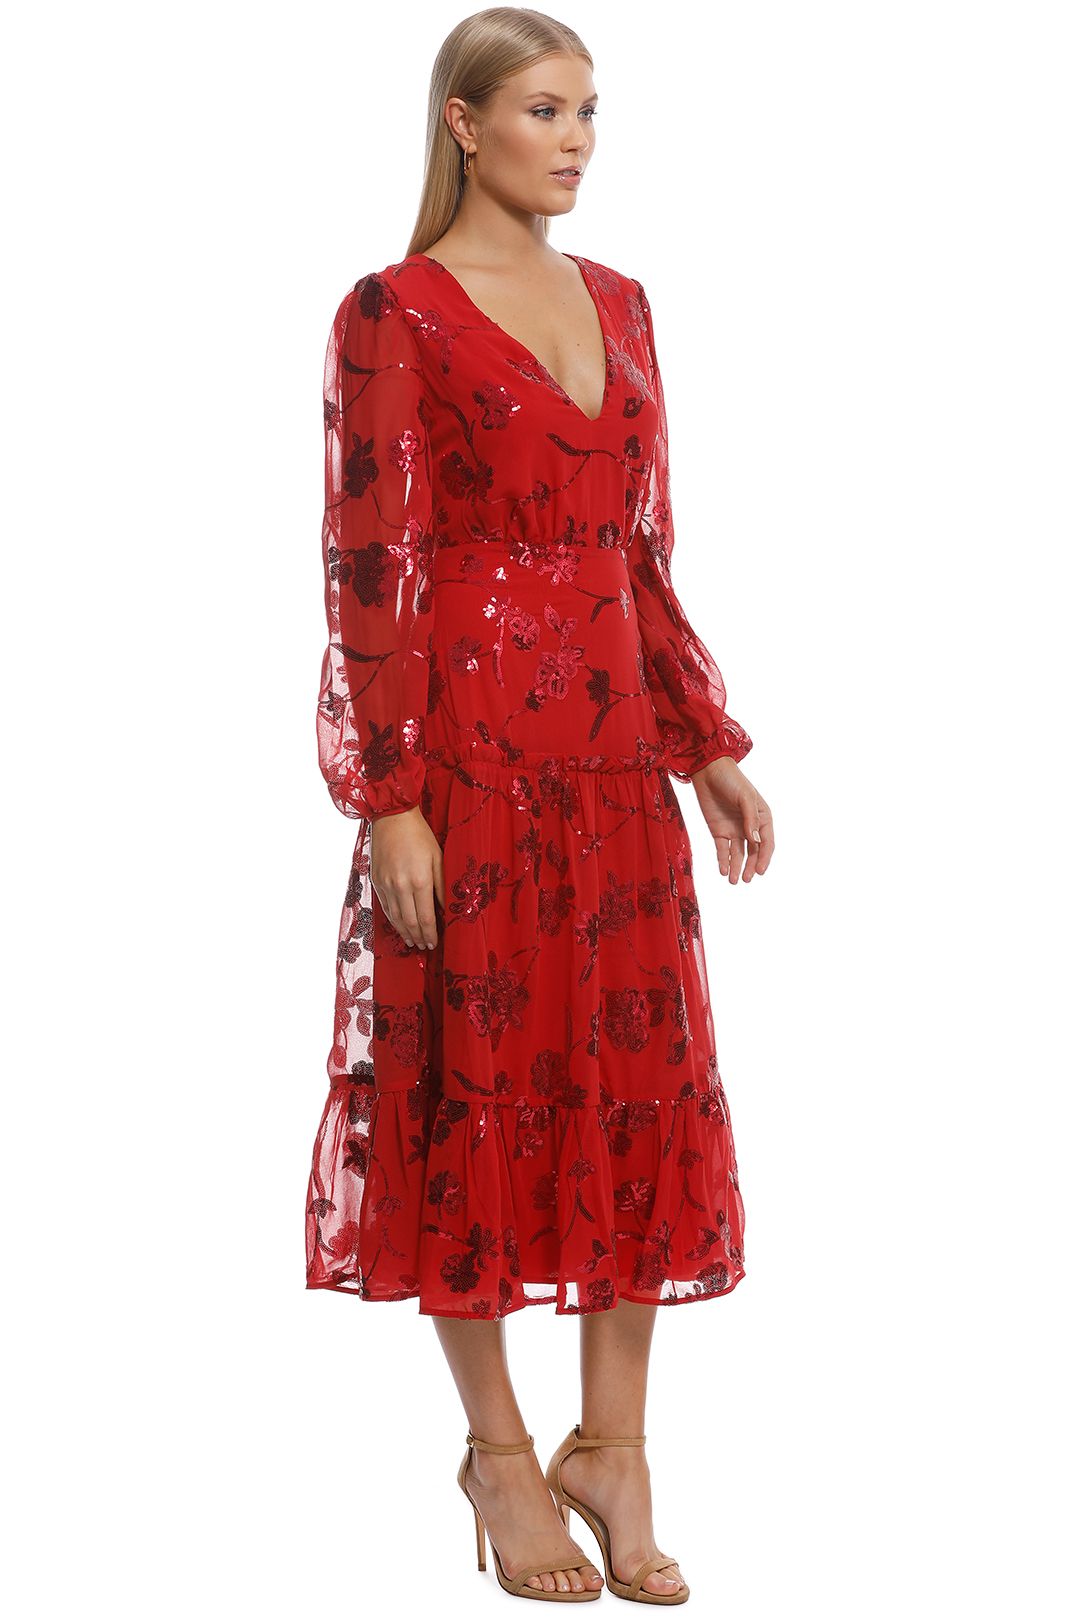 Talulah - Valiant Midi Dress - Red - Side